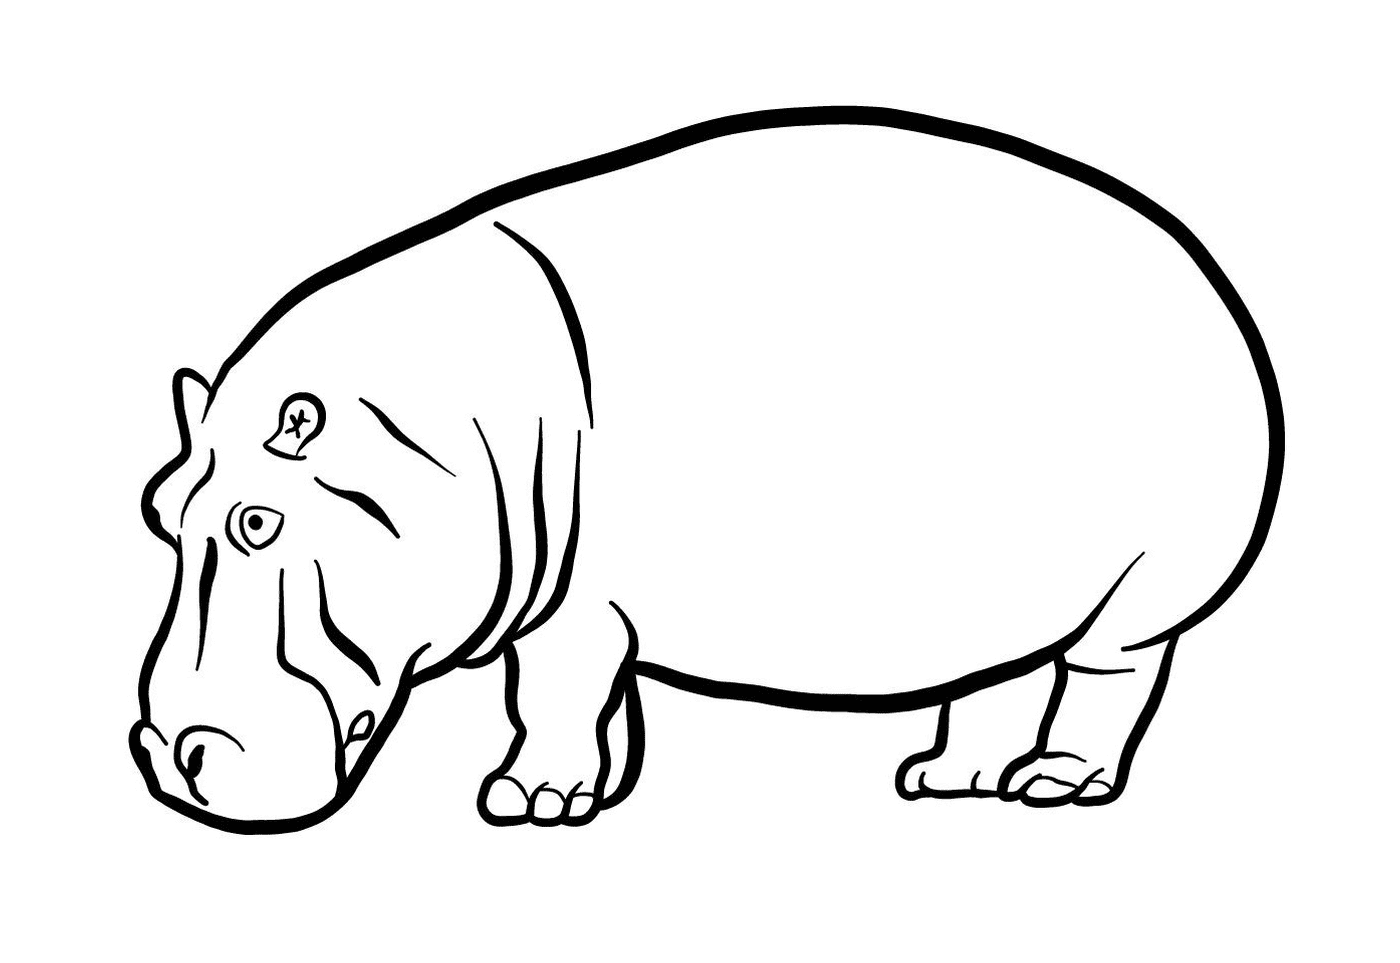  Un hipopótamo 